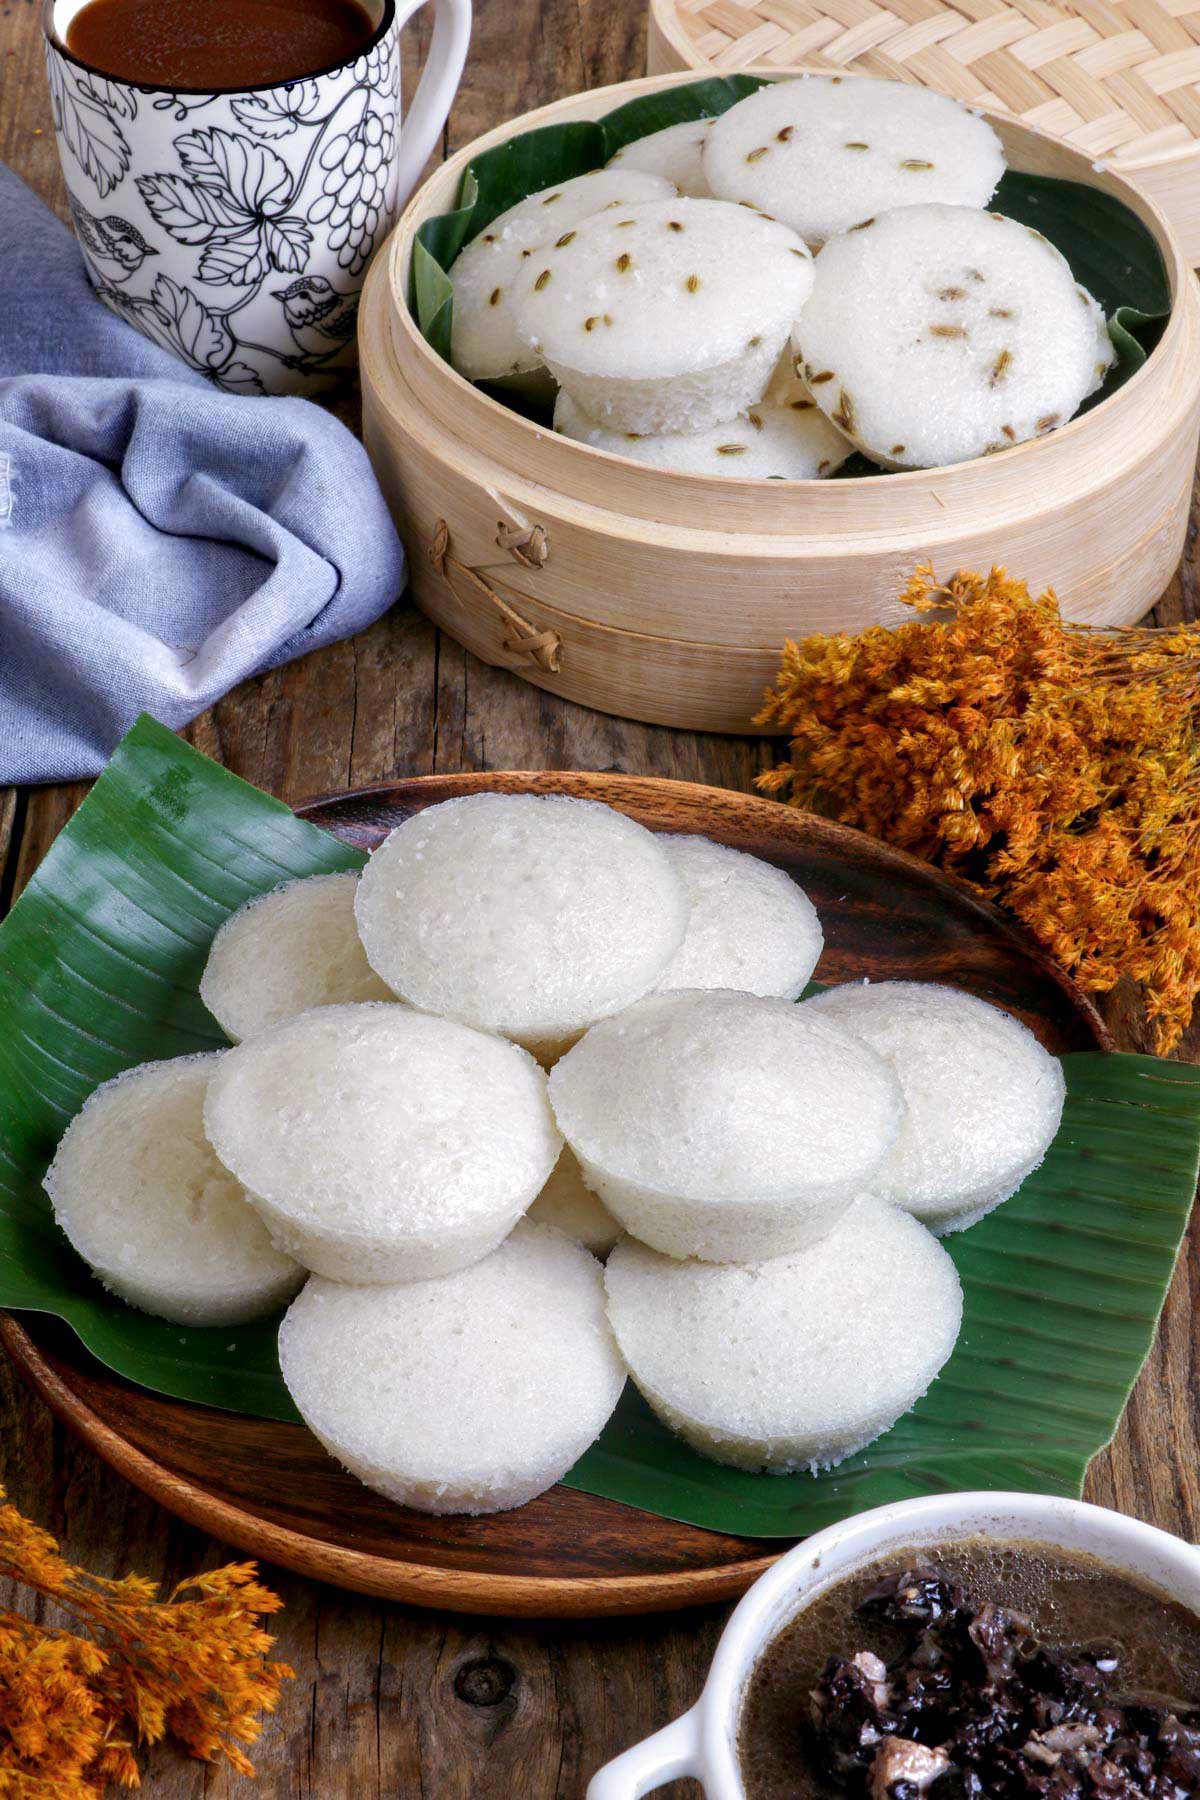 Putong Puti or Putong Bigas made from rice flour.